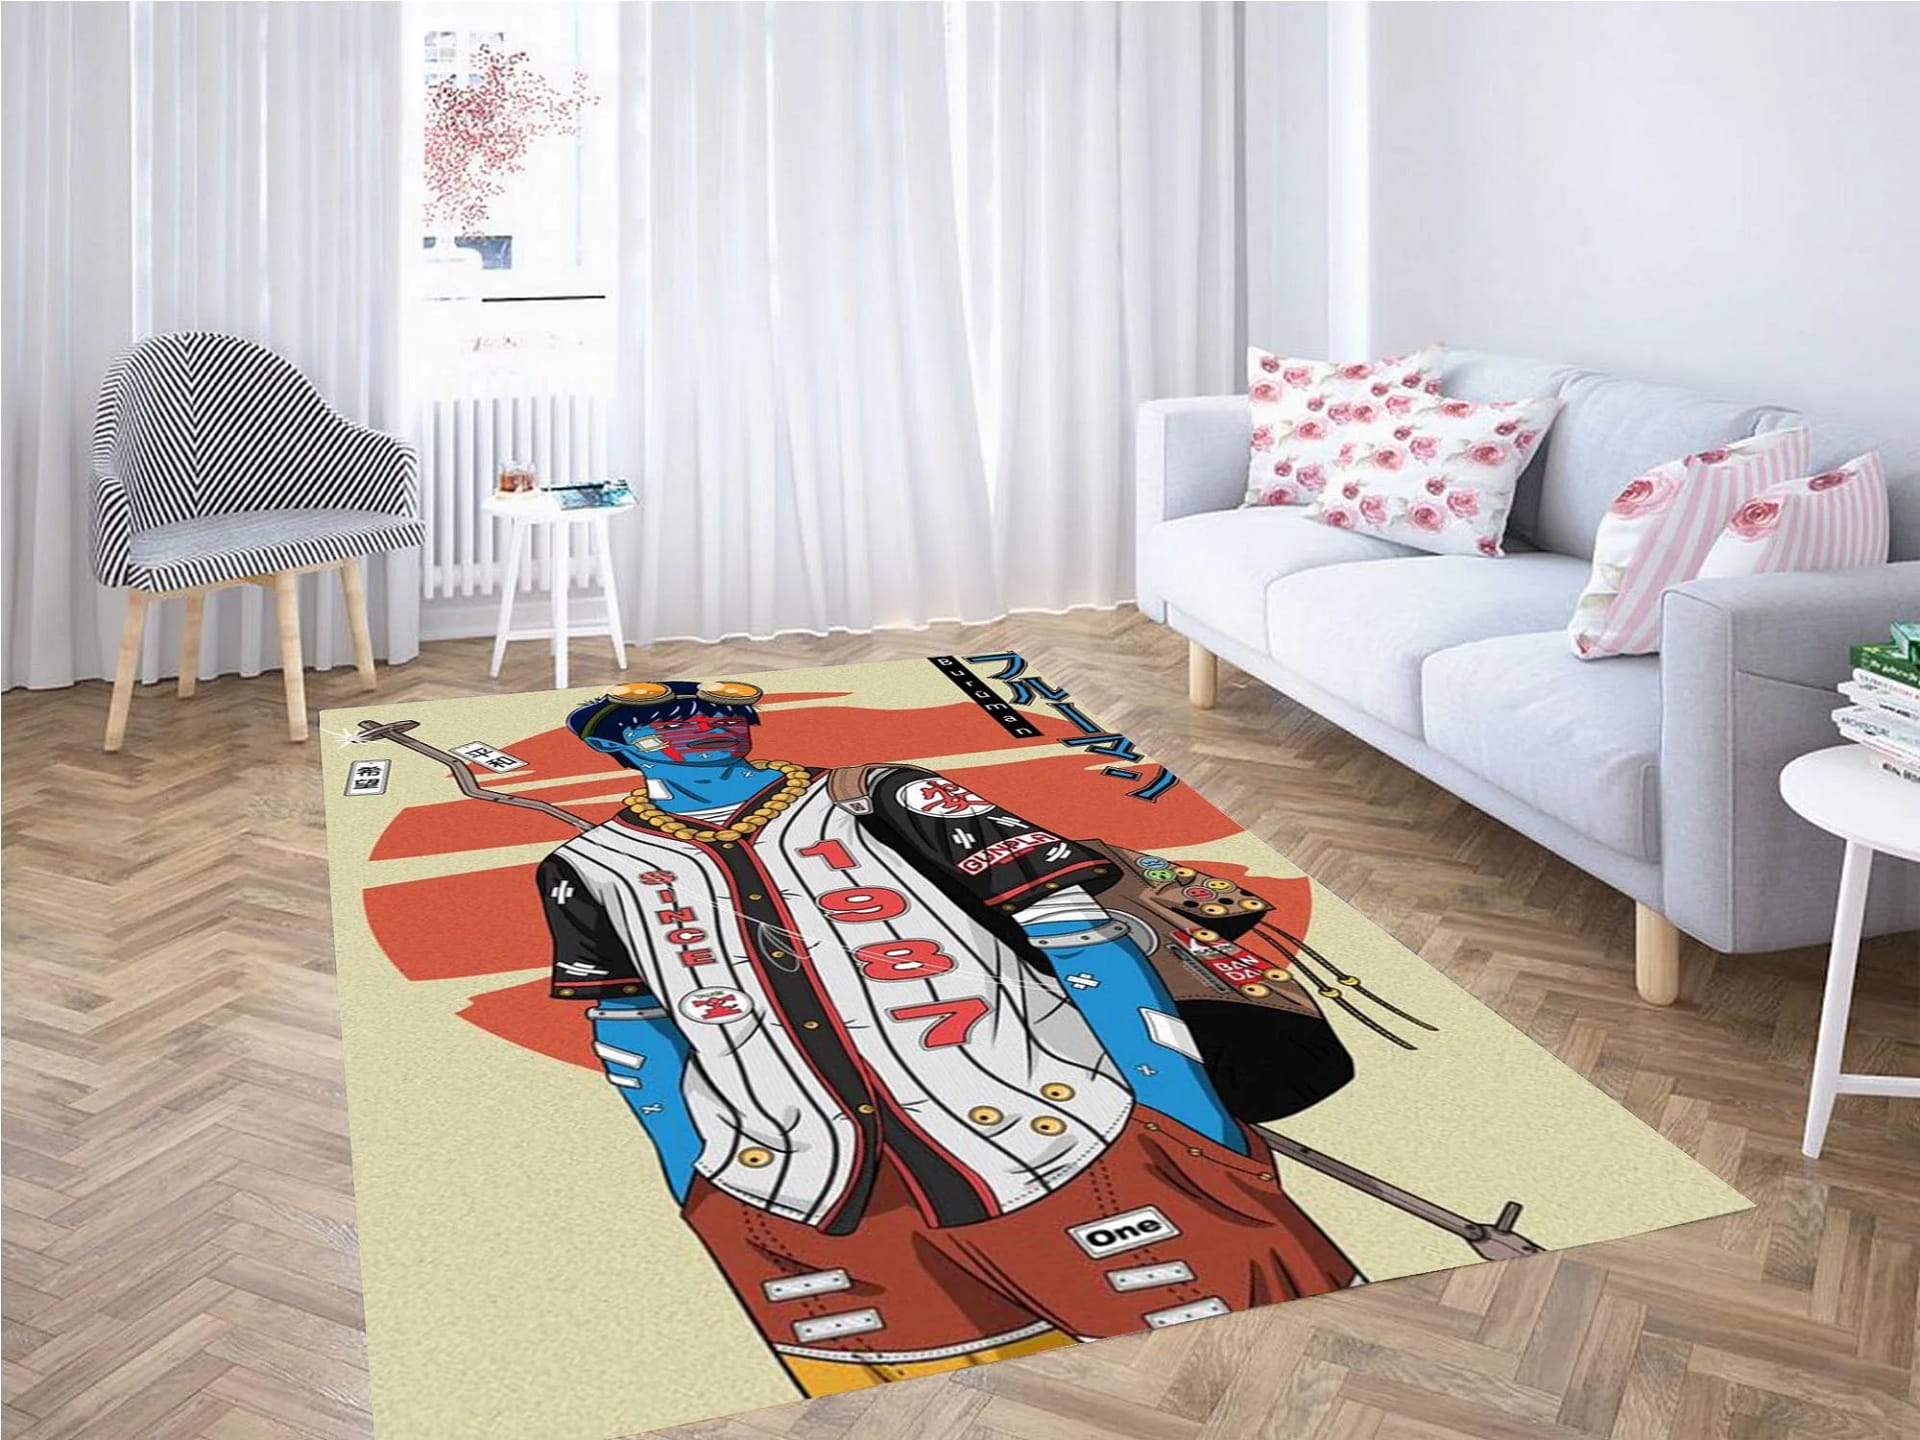 Hip Hop Ib Lobato Carpet Rug